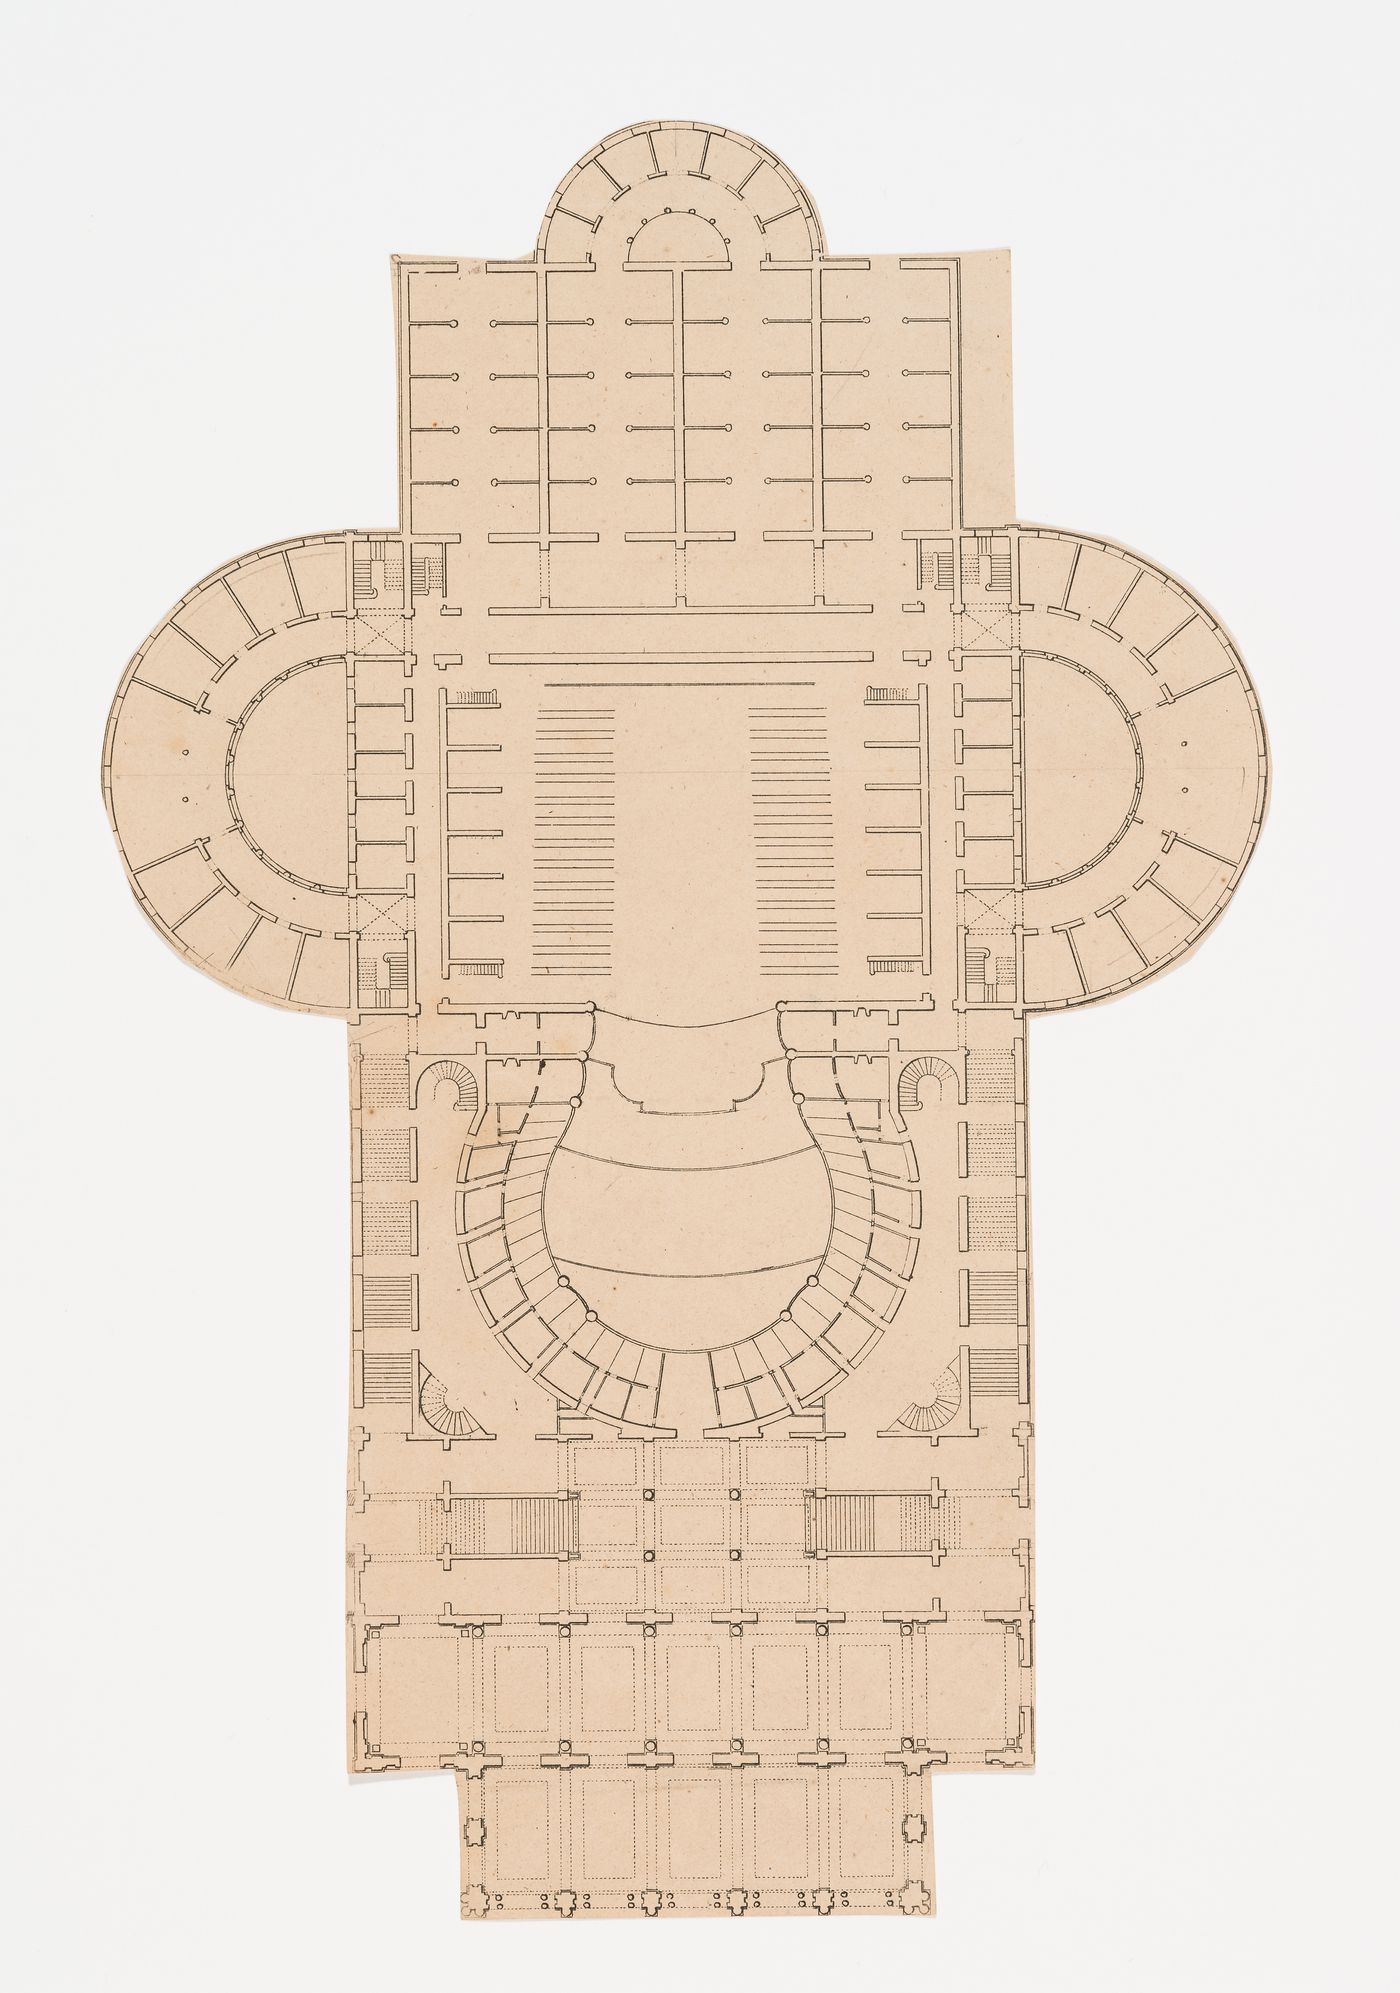 Ground floor plan for an opera house for the Théâtre impérial de l'opéra